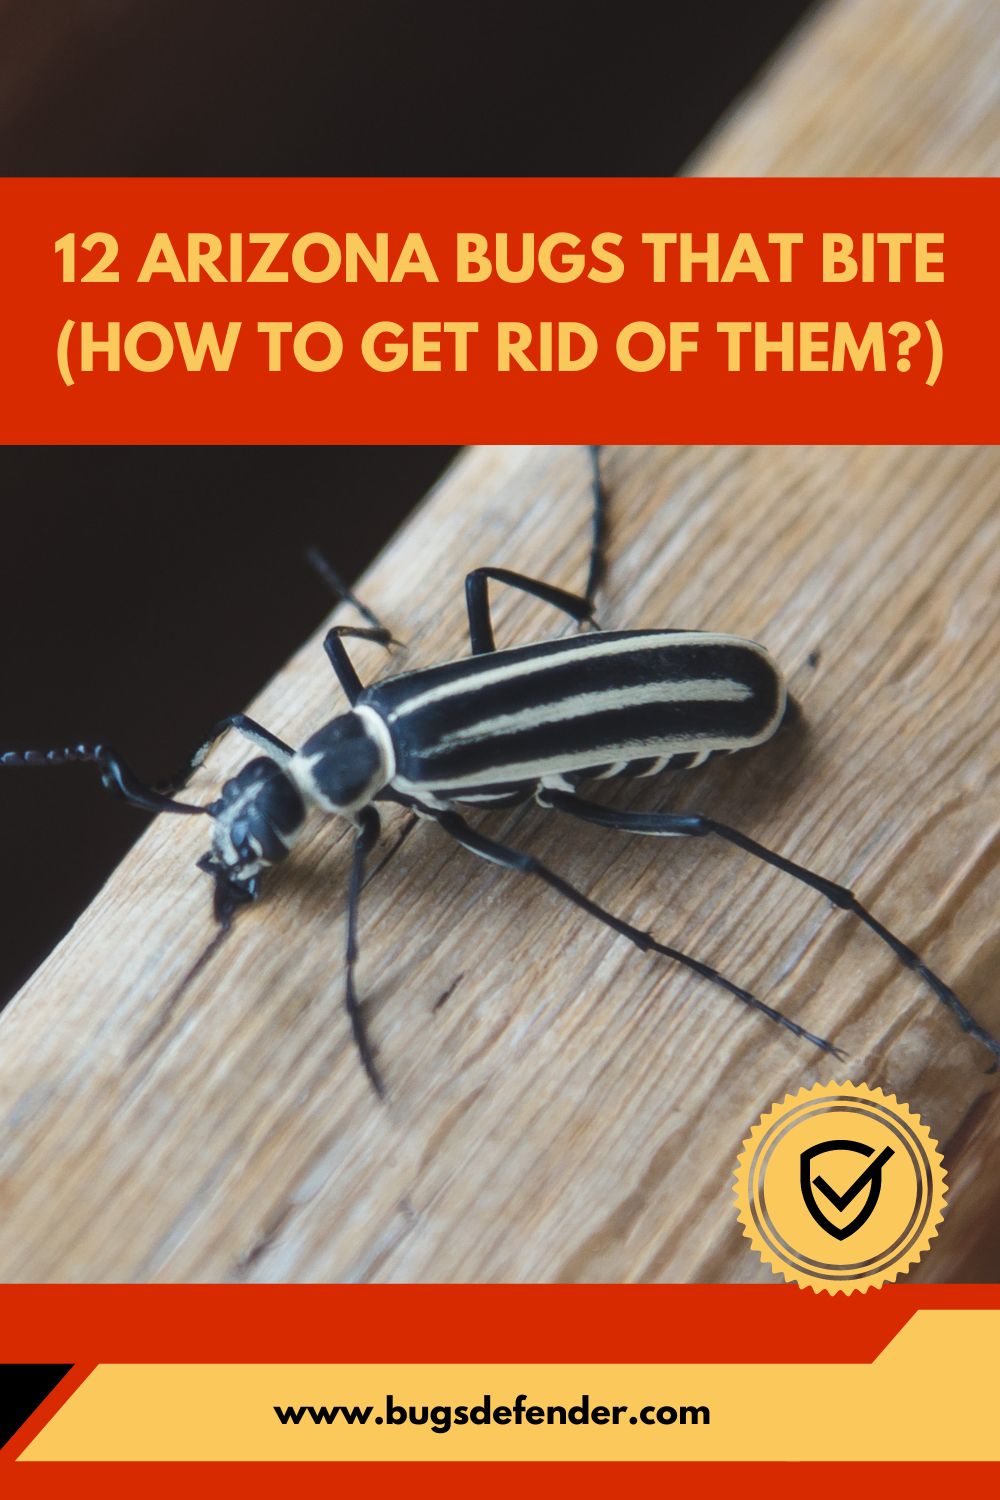 12 Arizona Bugs That Bite pin1